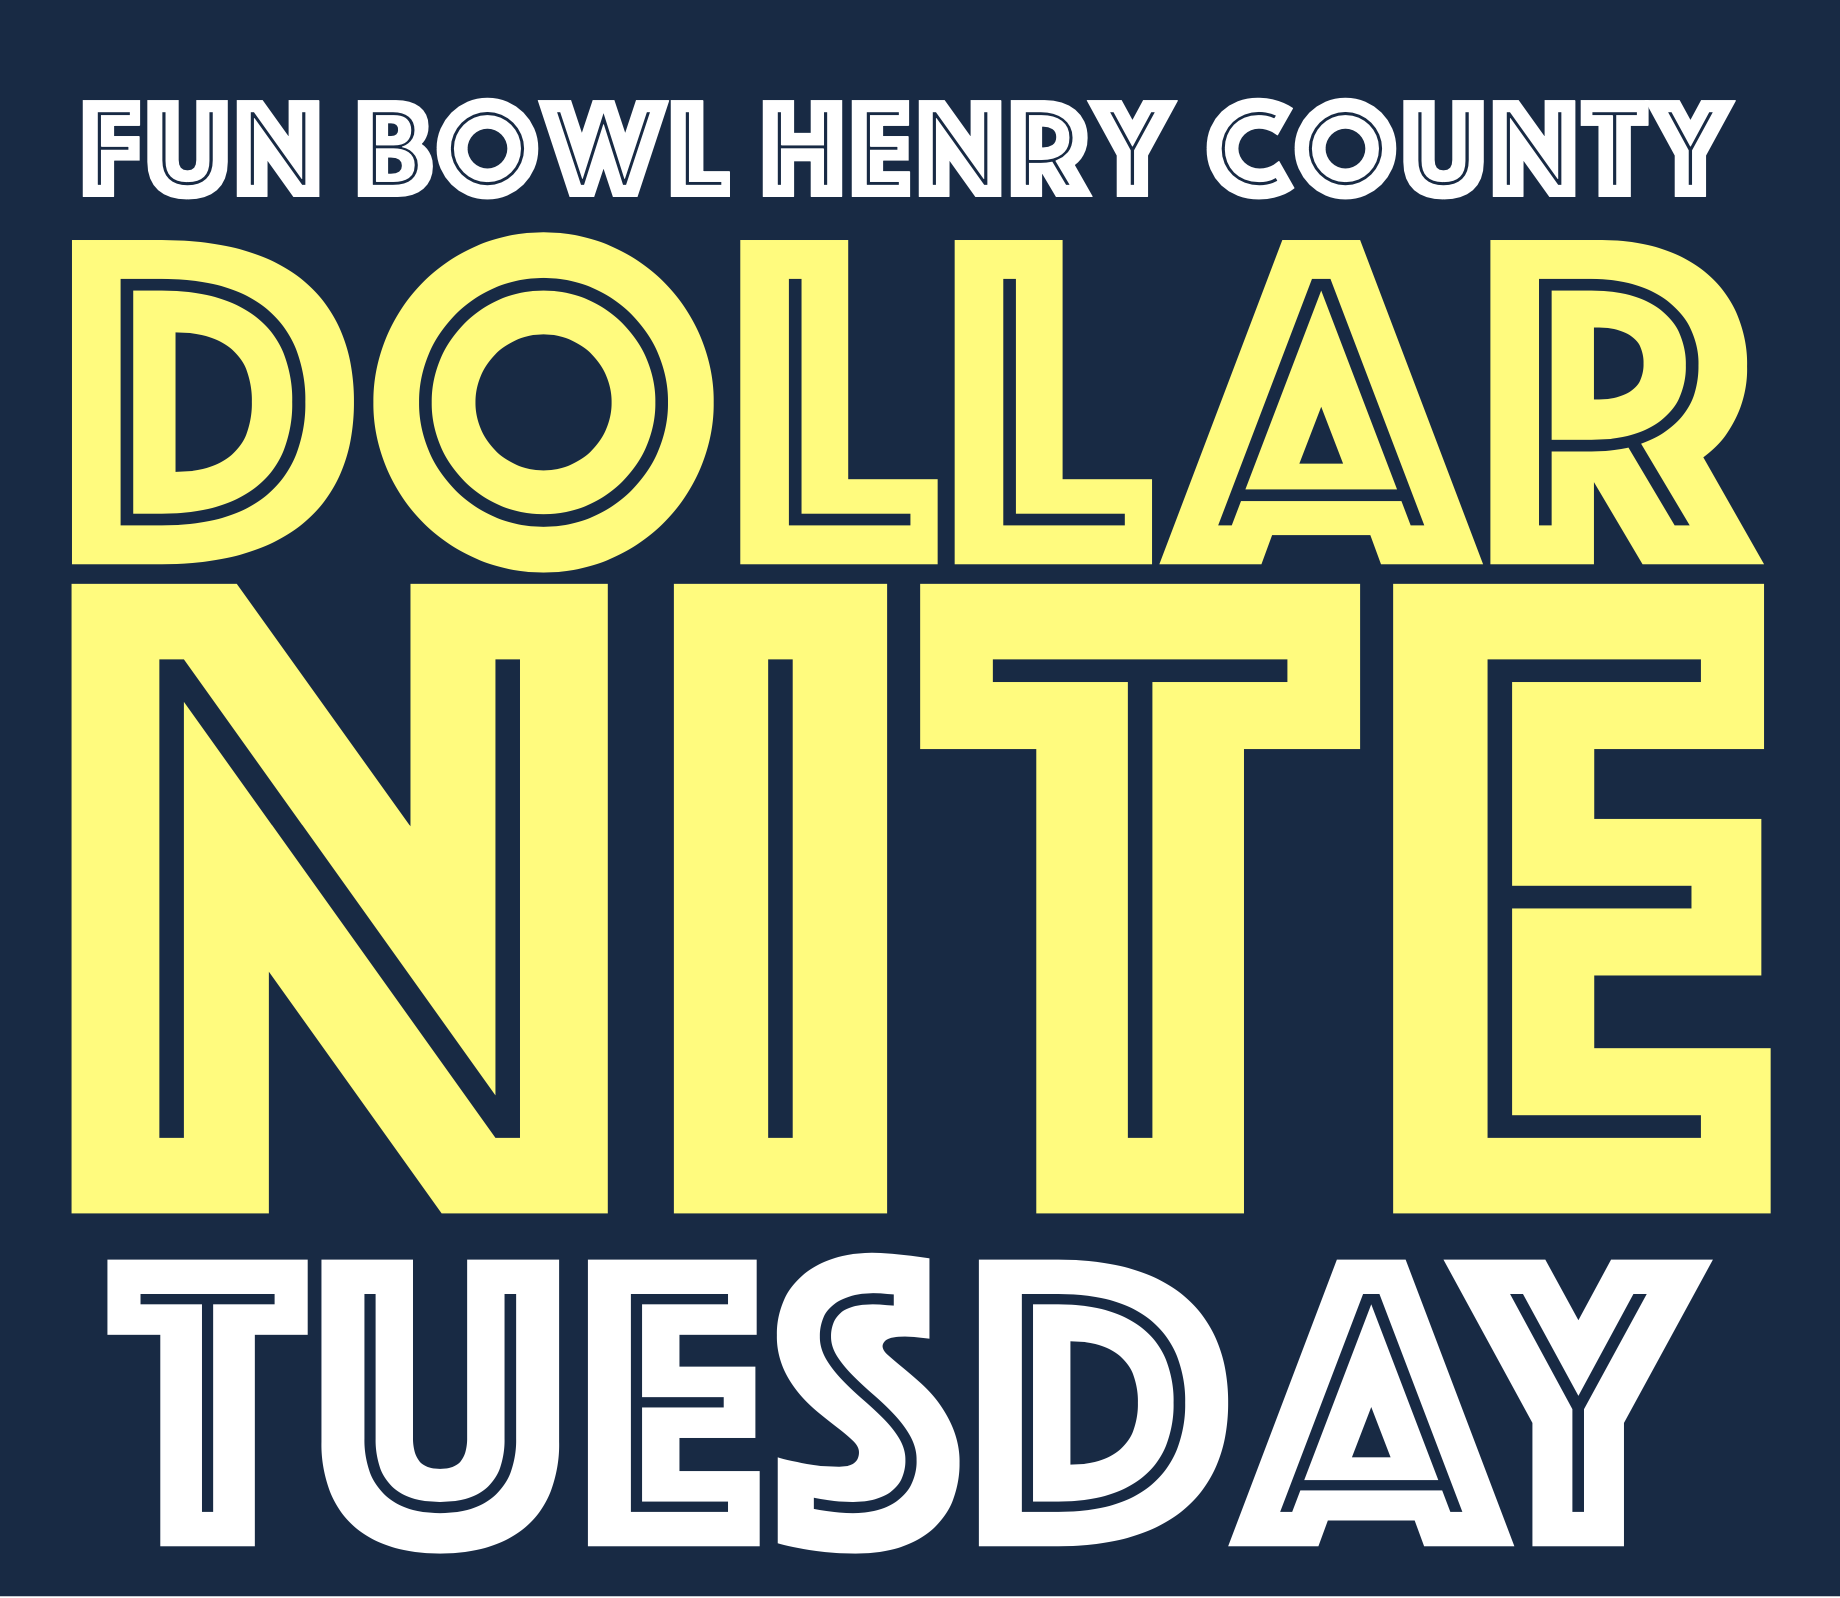 Fun Bowl Henry County Dollar Nite